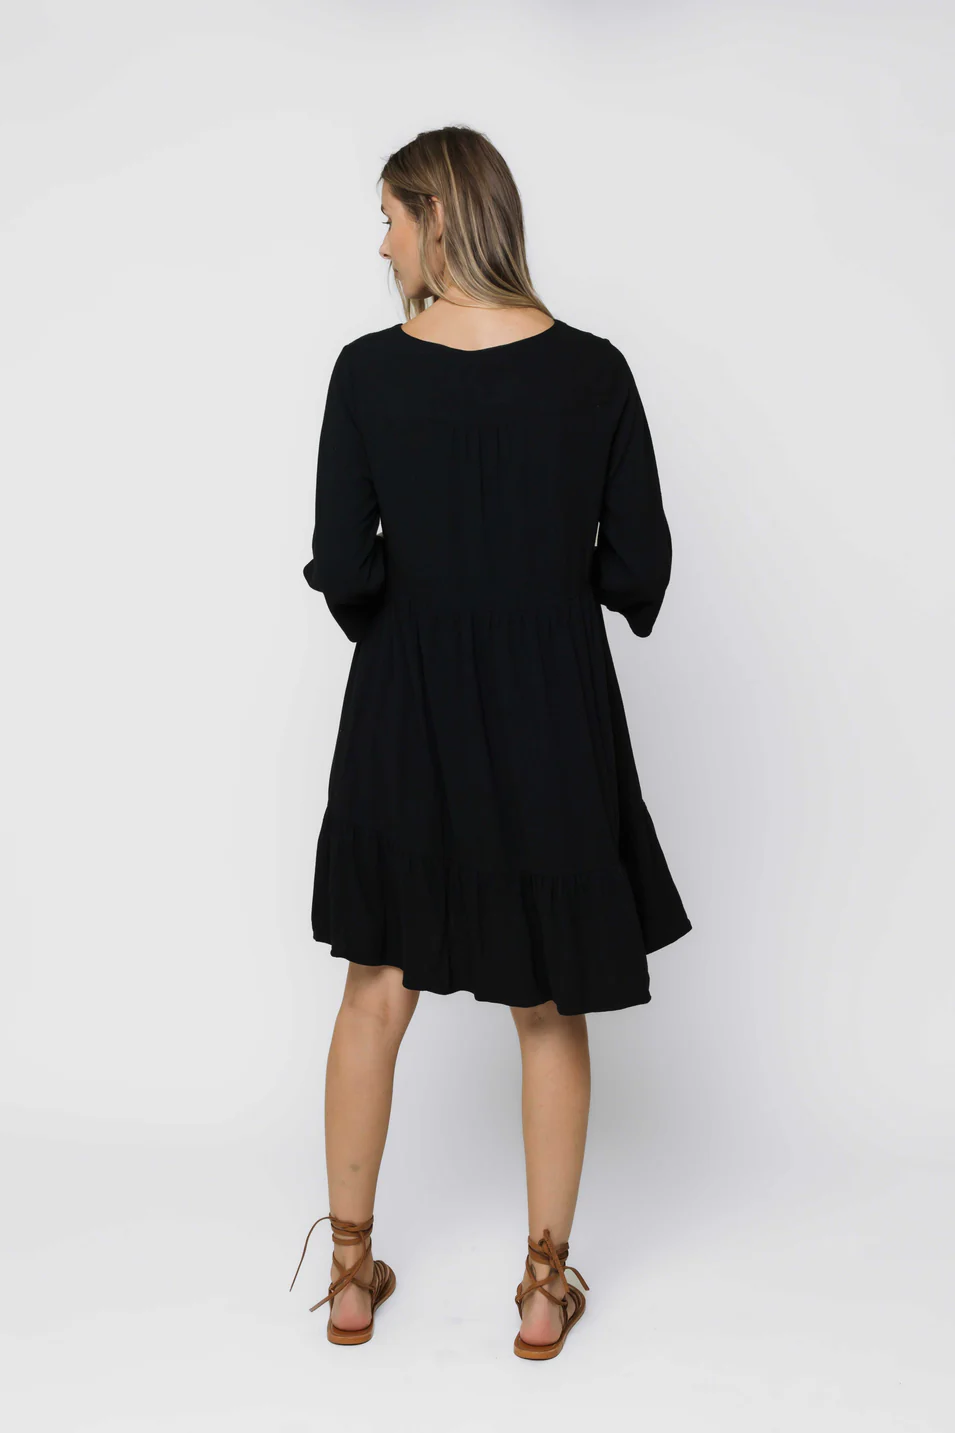 GRACE TIERED DRESS- black or soft floral